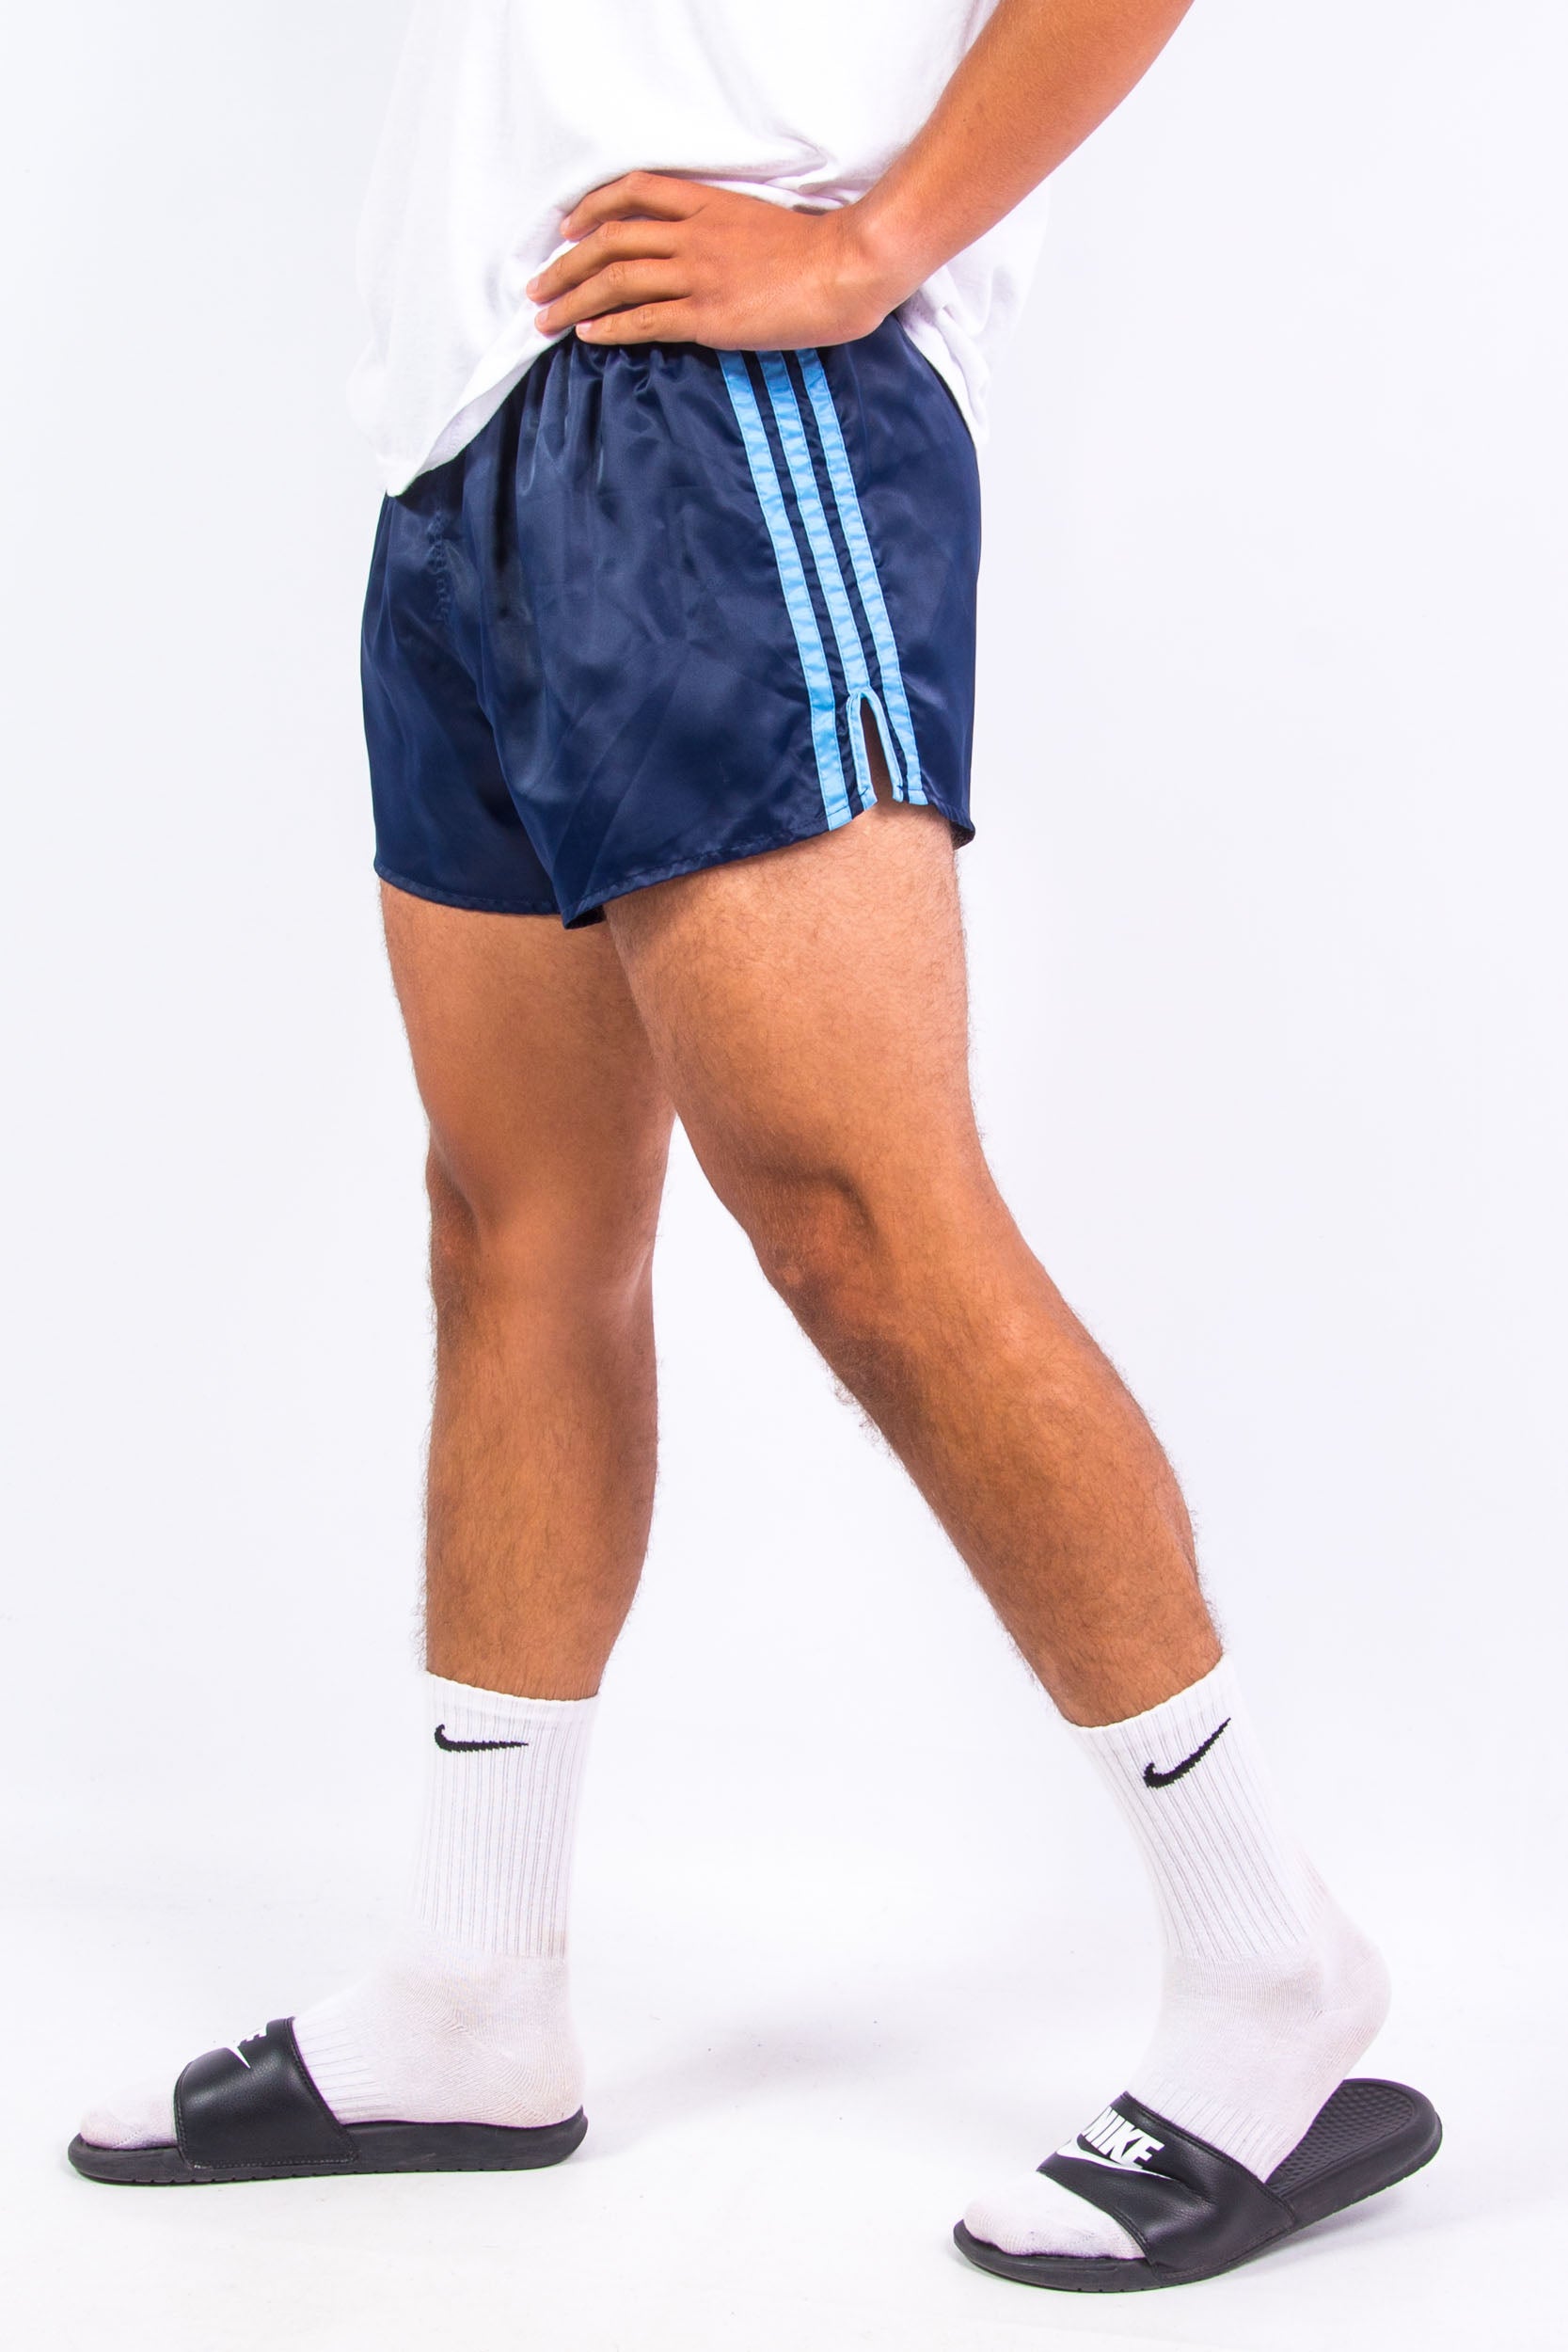 80 шорты. Adidas Vintage 80 shorts Sprinter Ygoslavia. Vintage adidas Sprinter shorts. Шорты adidas 80s для мужчин. Шорты adidas Vintage 90's.